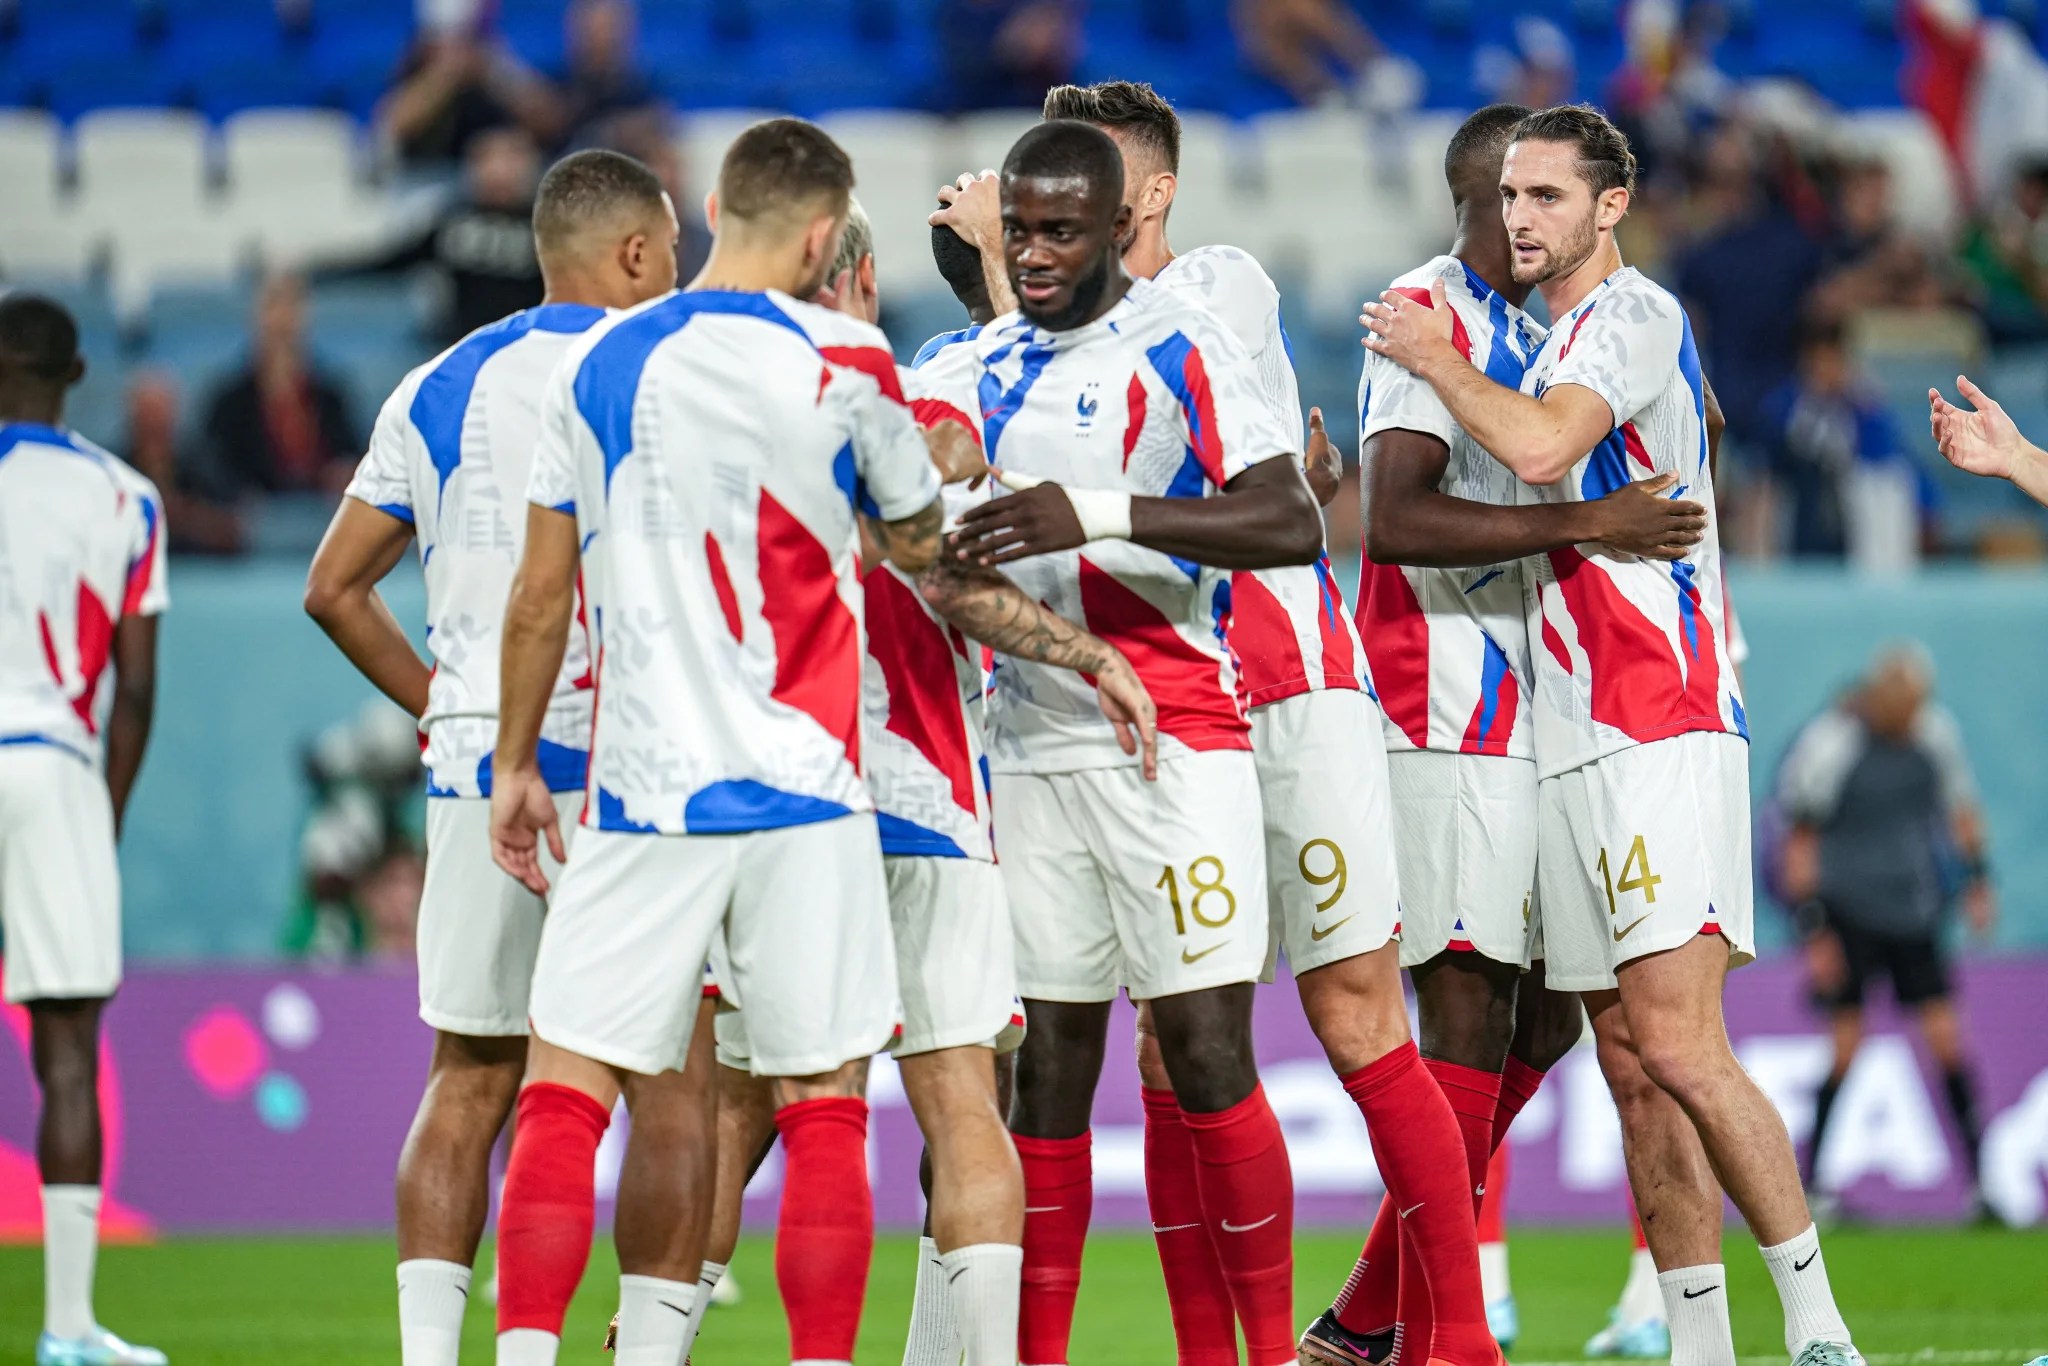 Prancis vs Denmark SKOR LANGSUNG: FRA 0-0 DEN, Prancis mengincar keunggulan awal